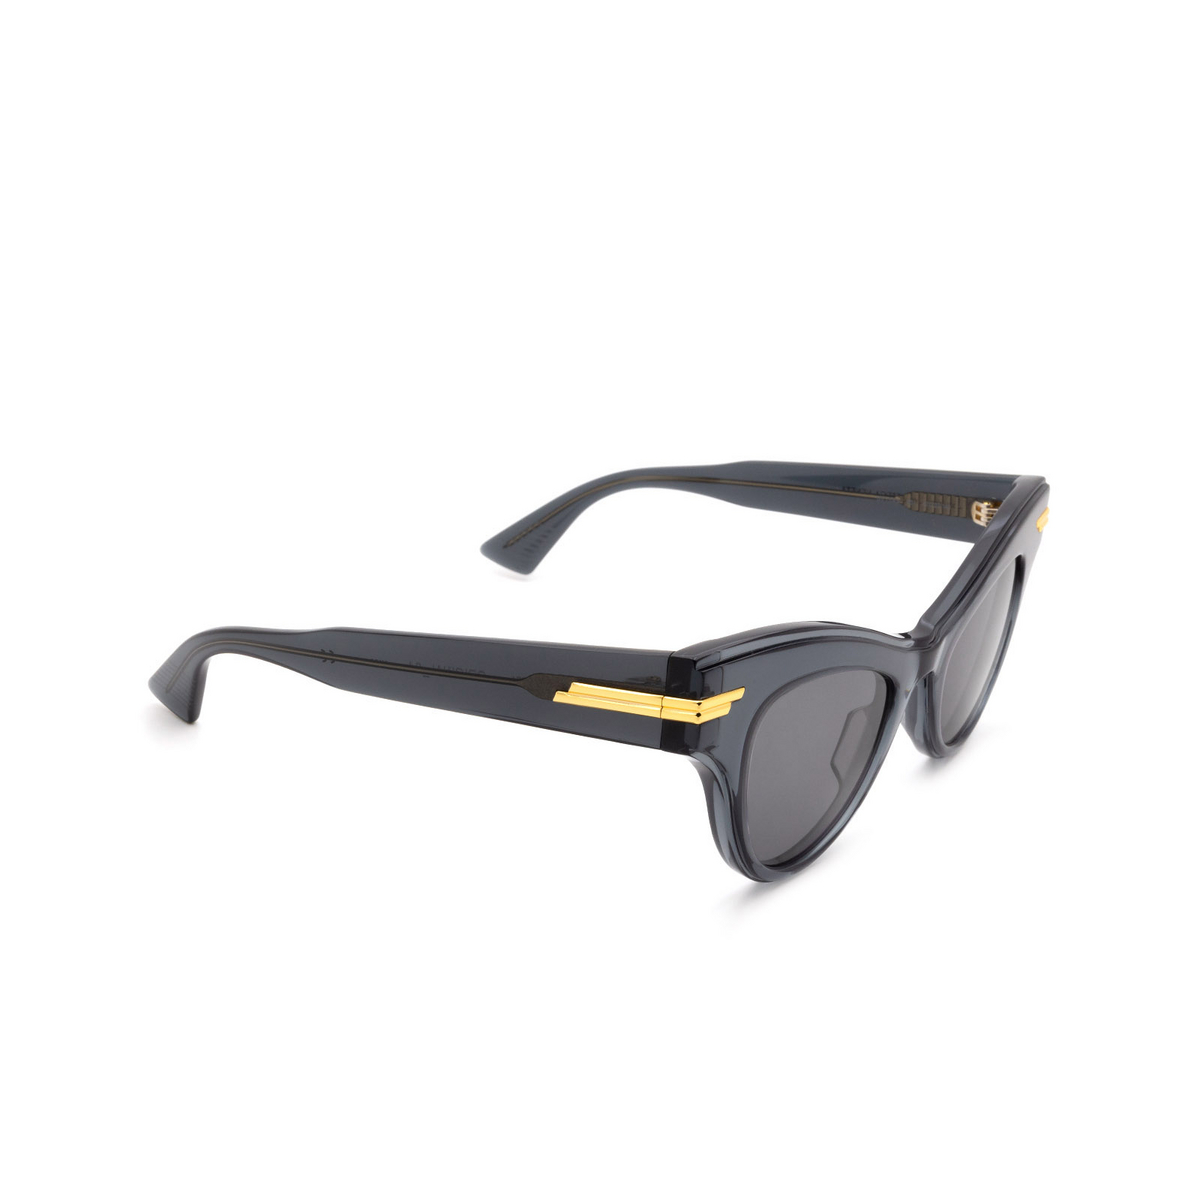 Bottega Veneta® Sunglasses: BV1004S color Grey 001 - front view.